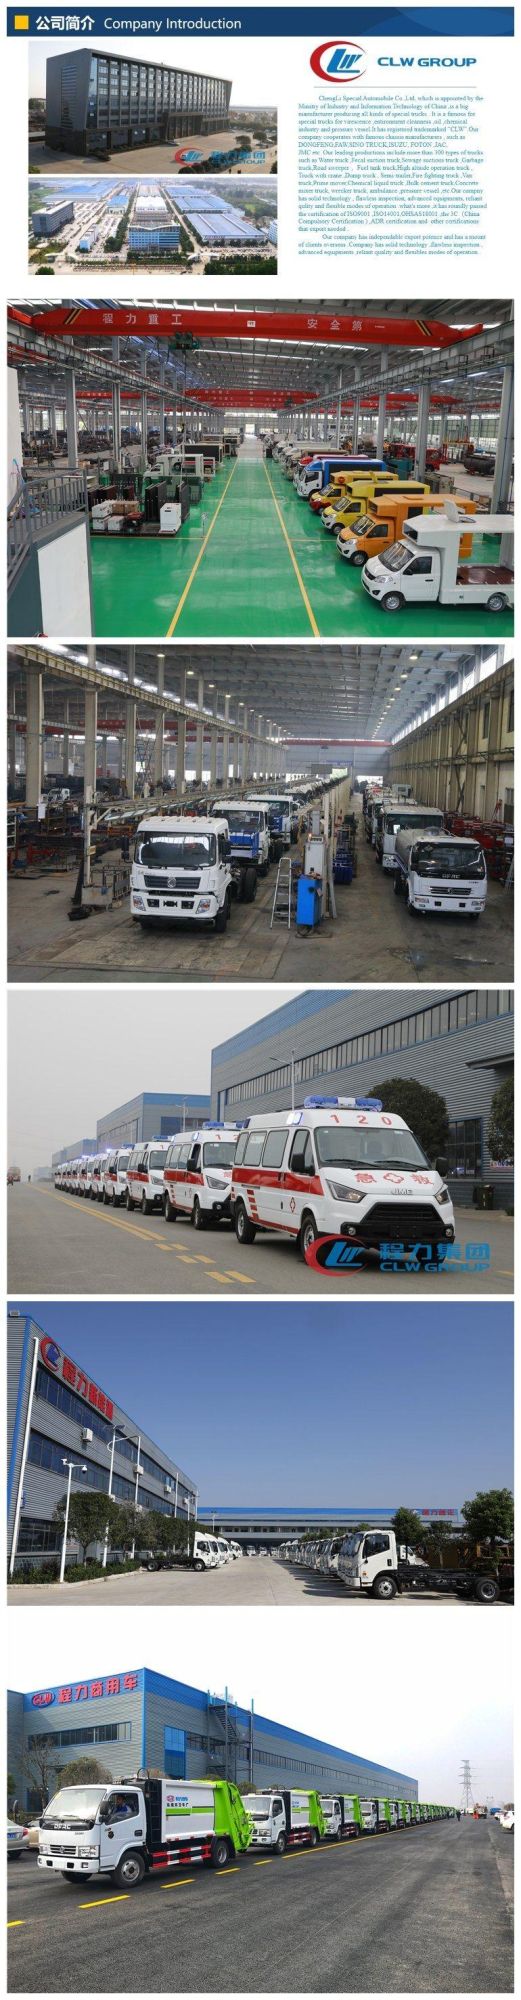 Dongfeng 18meters Aerial Work Platforms Truck Price Hydraulic Work Platform Truck, Adjustable Height Work Platform